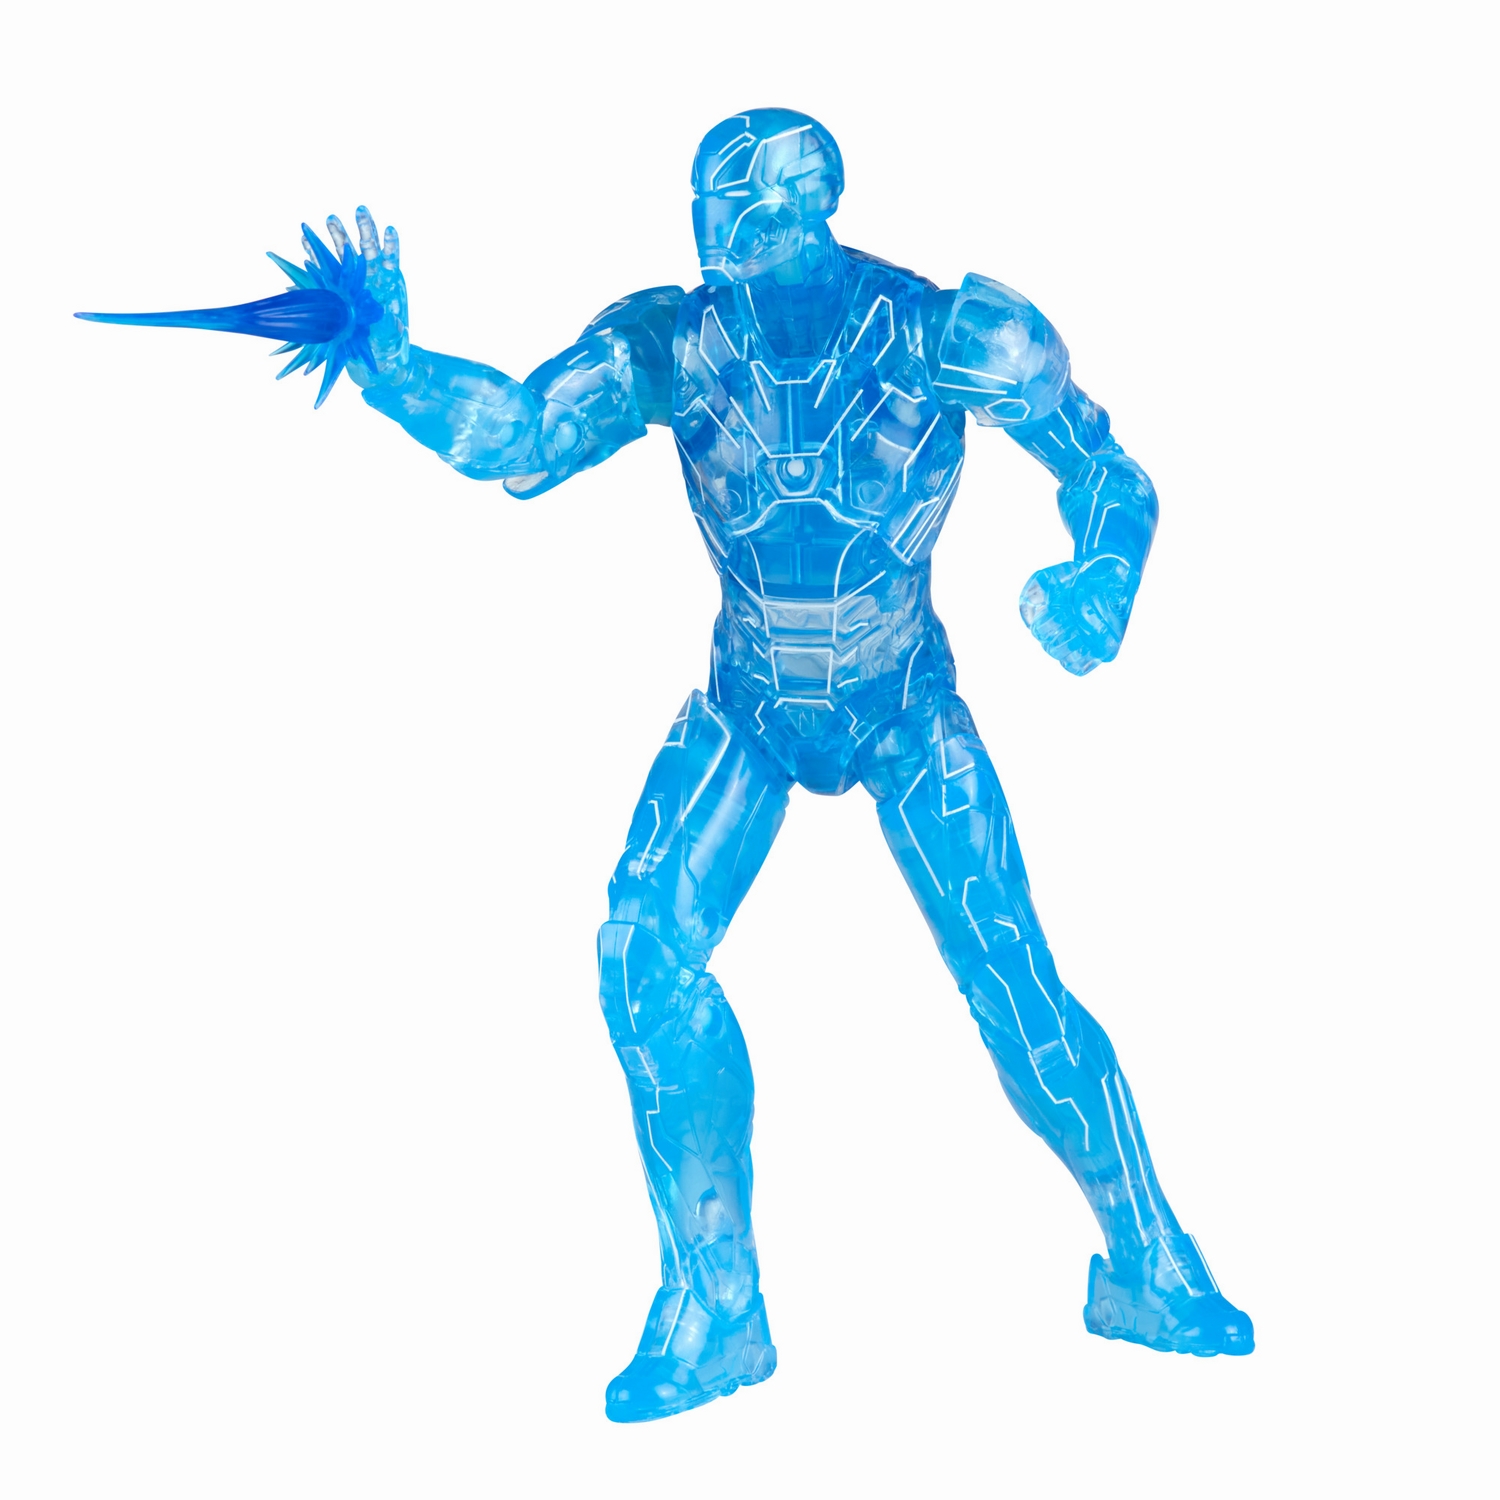 MARVEL LEGENDS SERIES 6-INCH IRON MAN Figure Assortment - Hologram Iron Man - oop (3).jpg